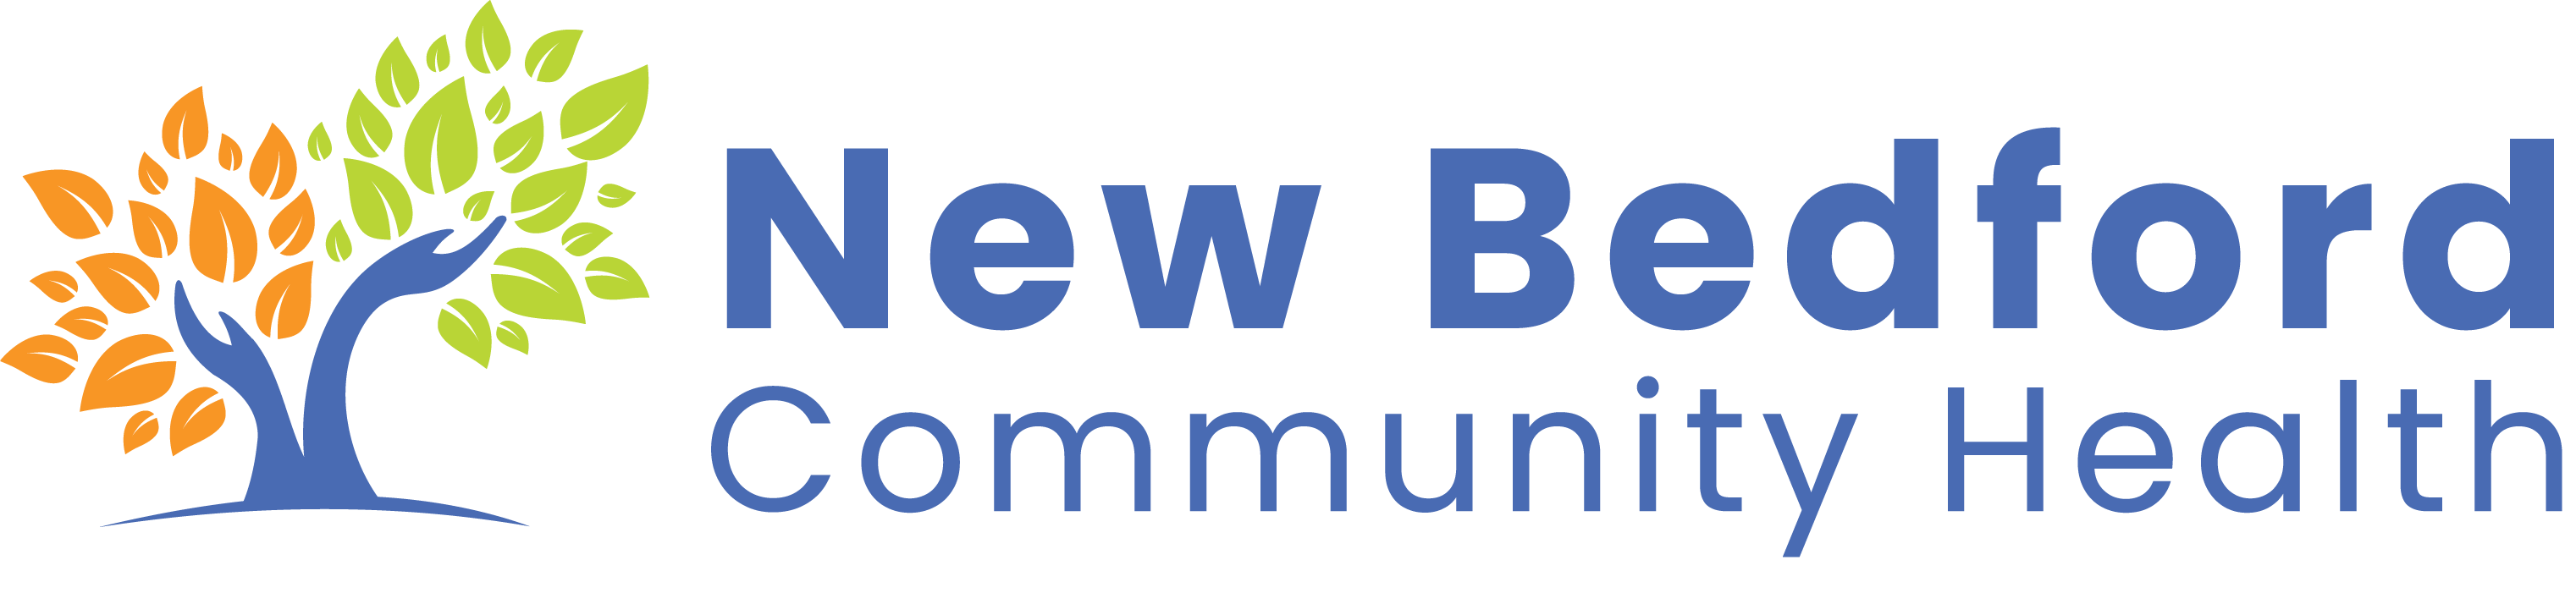 GNB Community Health logo